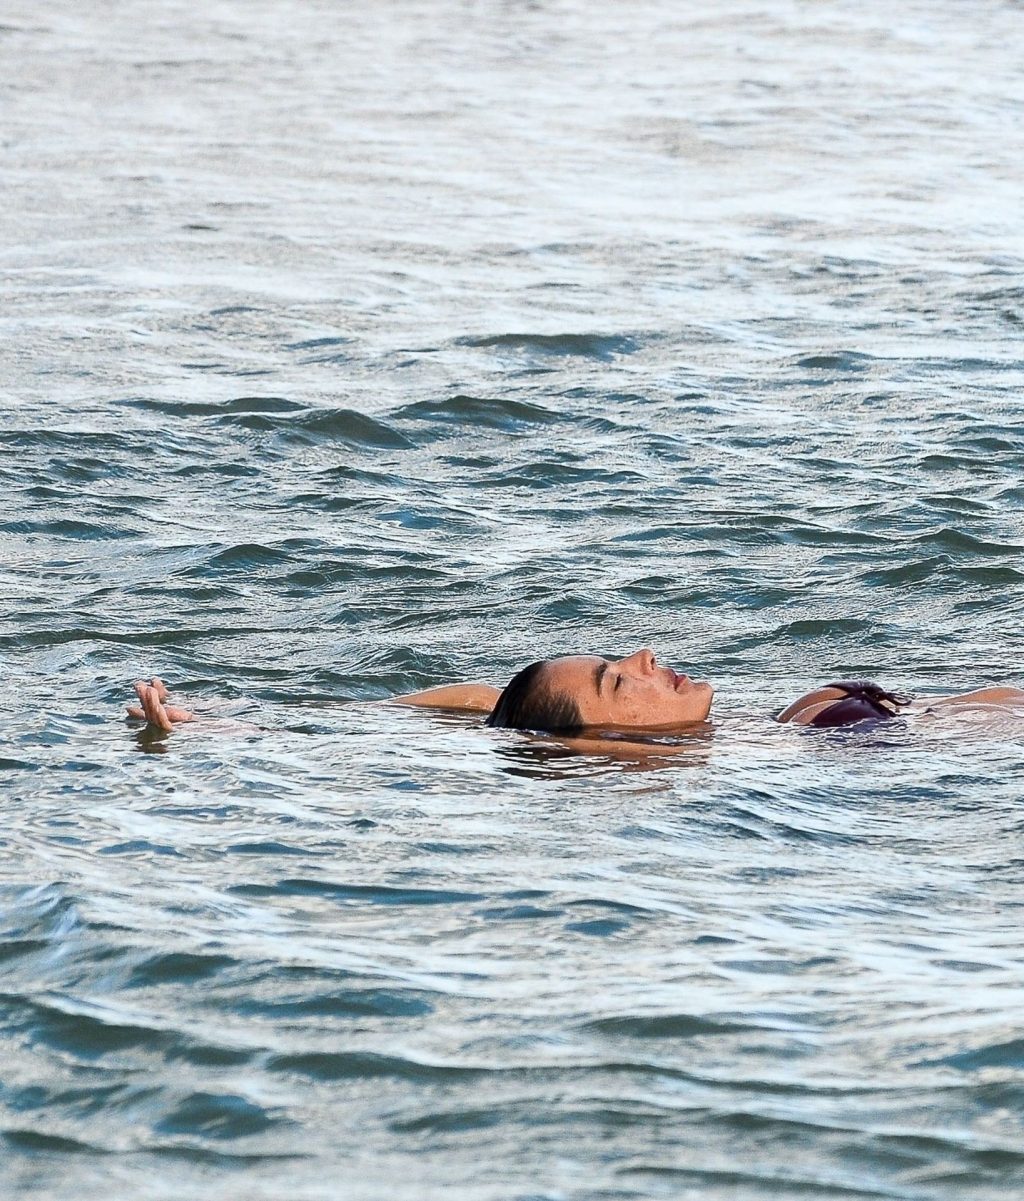 Alessandra Ambrosio Rocks a Red Bikini on the Beach in Brazil (62 Photos)